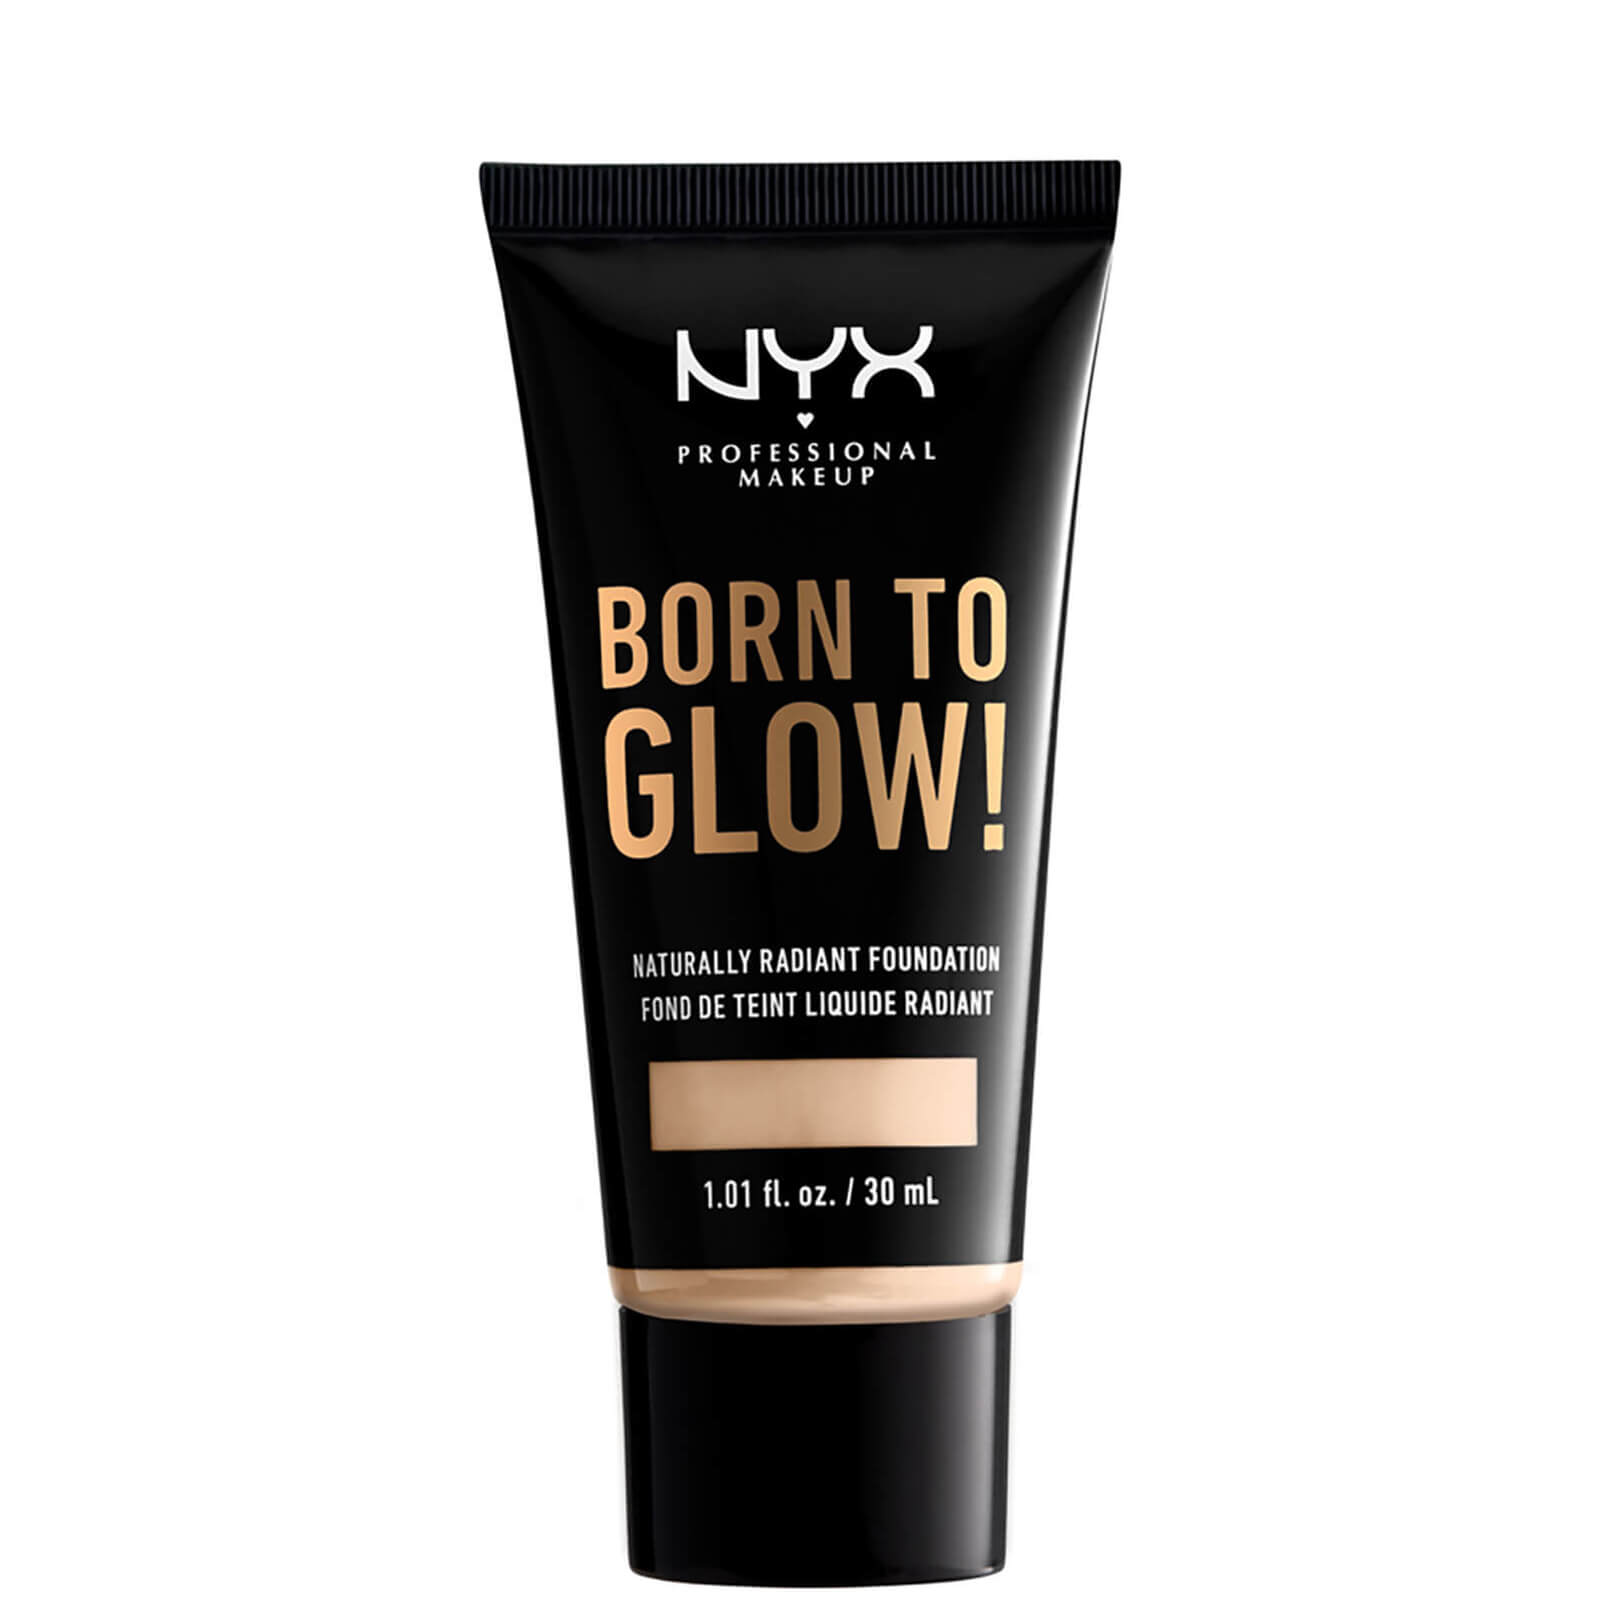 NYX Professional Makeup Born to Glow Naturally Radiant Foundation 30ml (Various Shades) - Fair